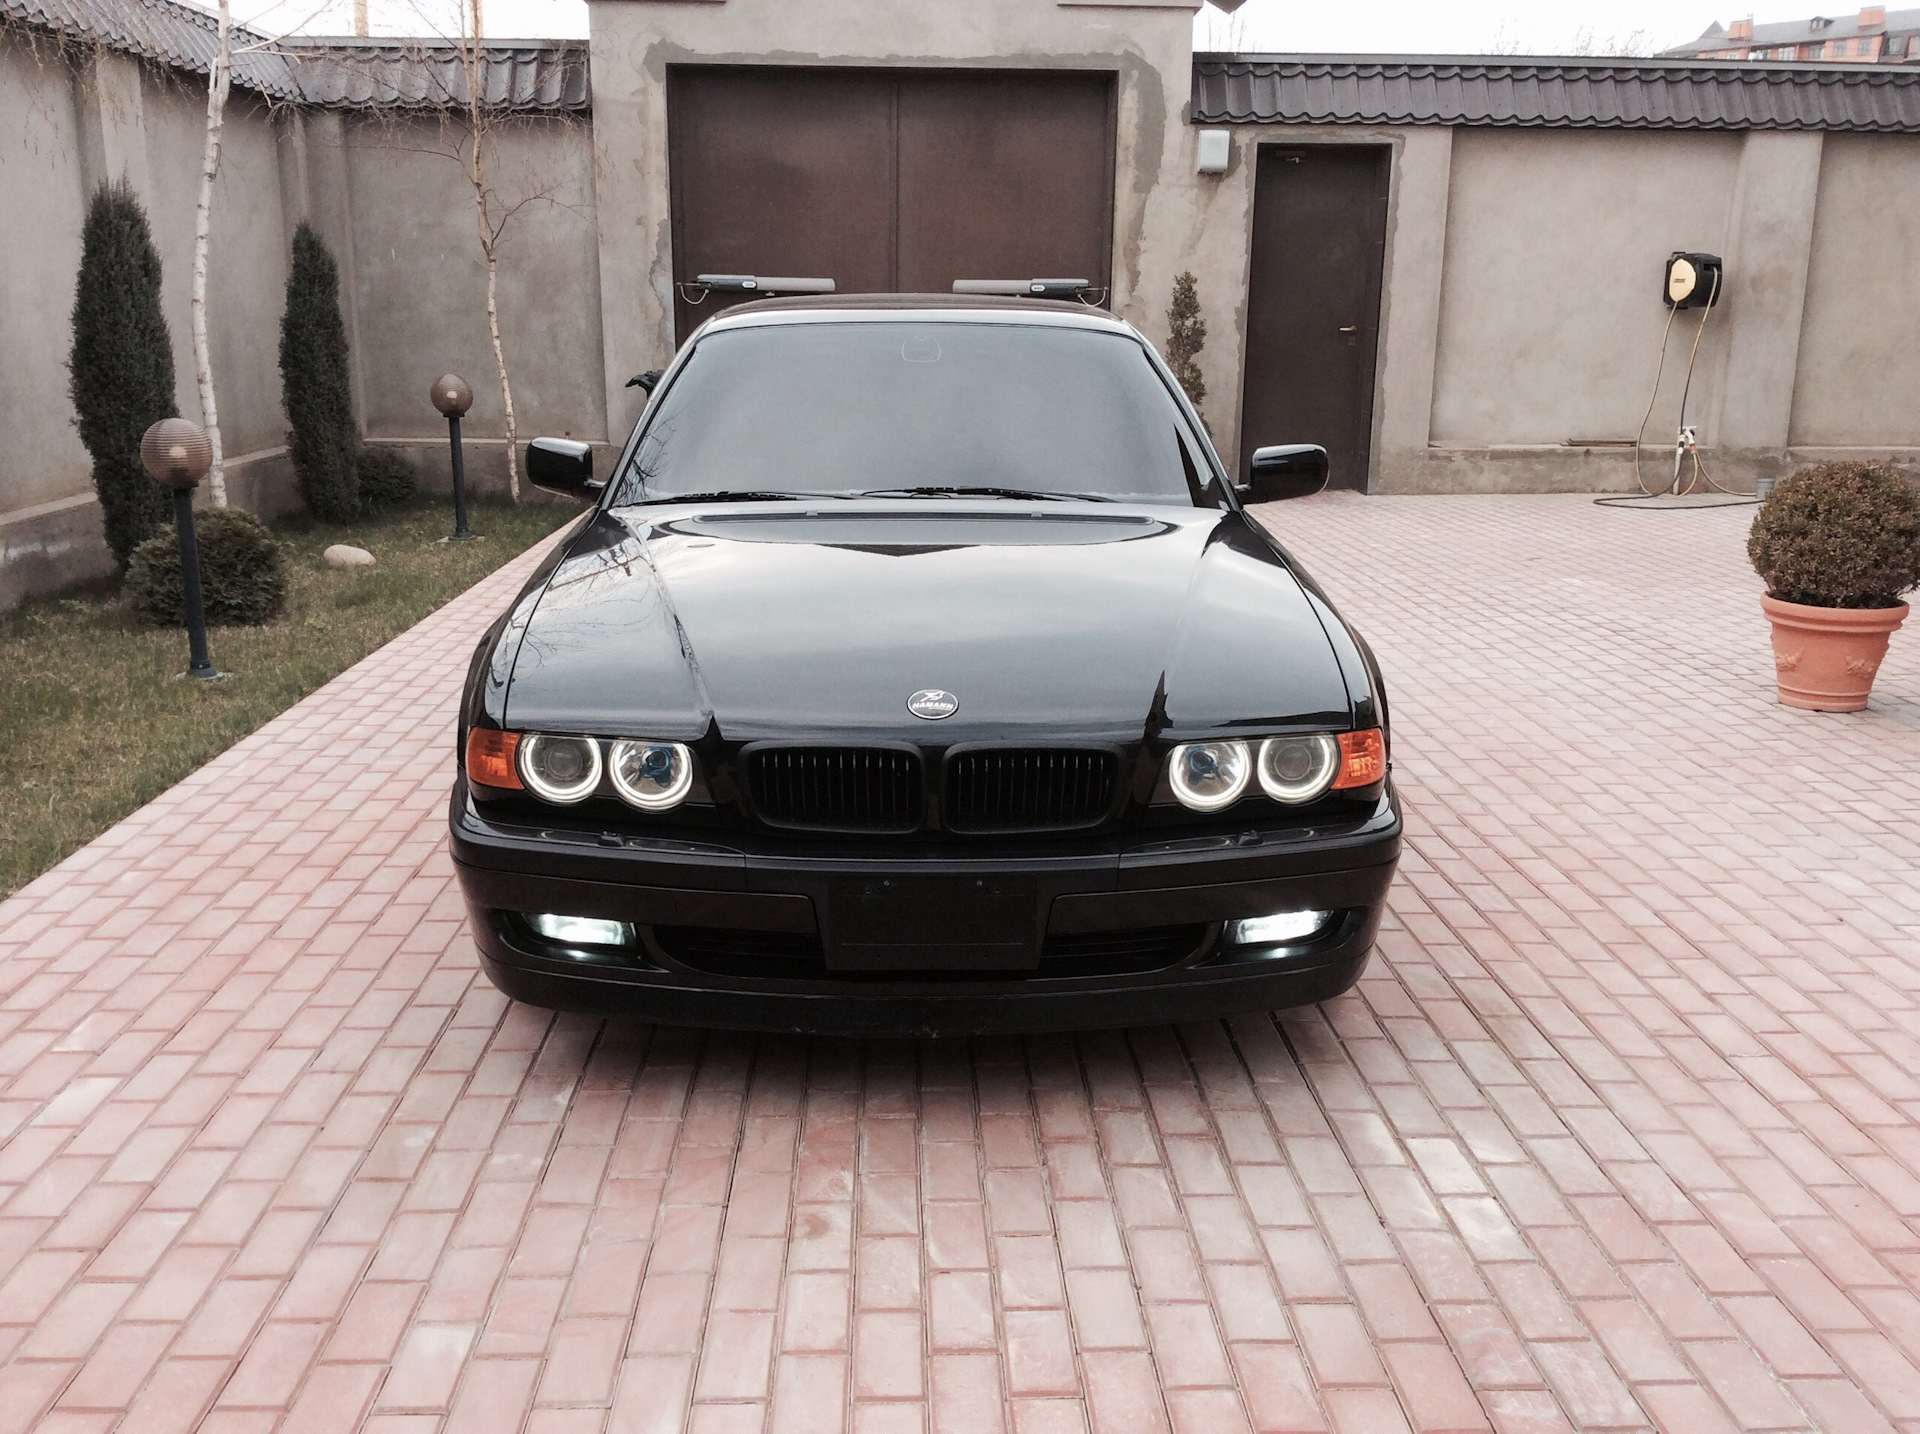 Беха беха семерка. BMW 7 2001. БМВ 7 2001. БМВ 7 е38 2001. BMW 7 Series 2001.